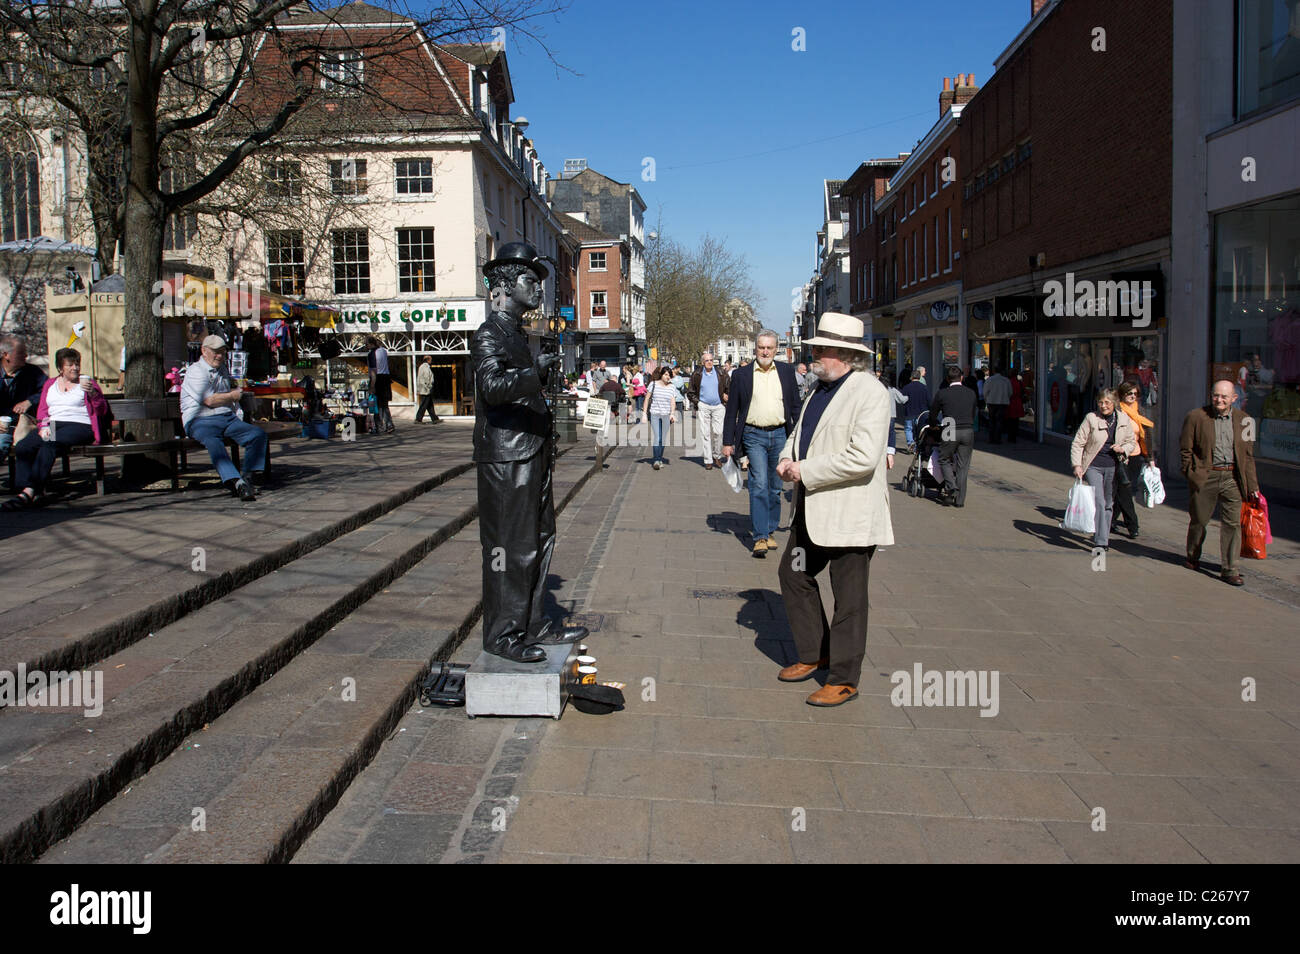 Charlie Chaplin,street performance,busking,statue,human activity,social interact,Norwich,Norfolk,UK Stock Photo